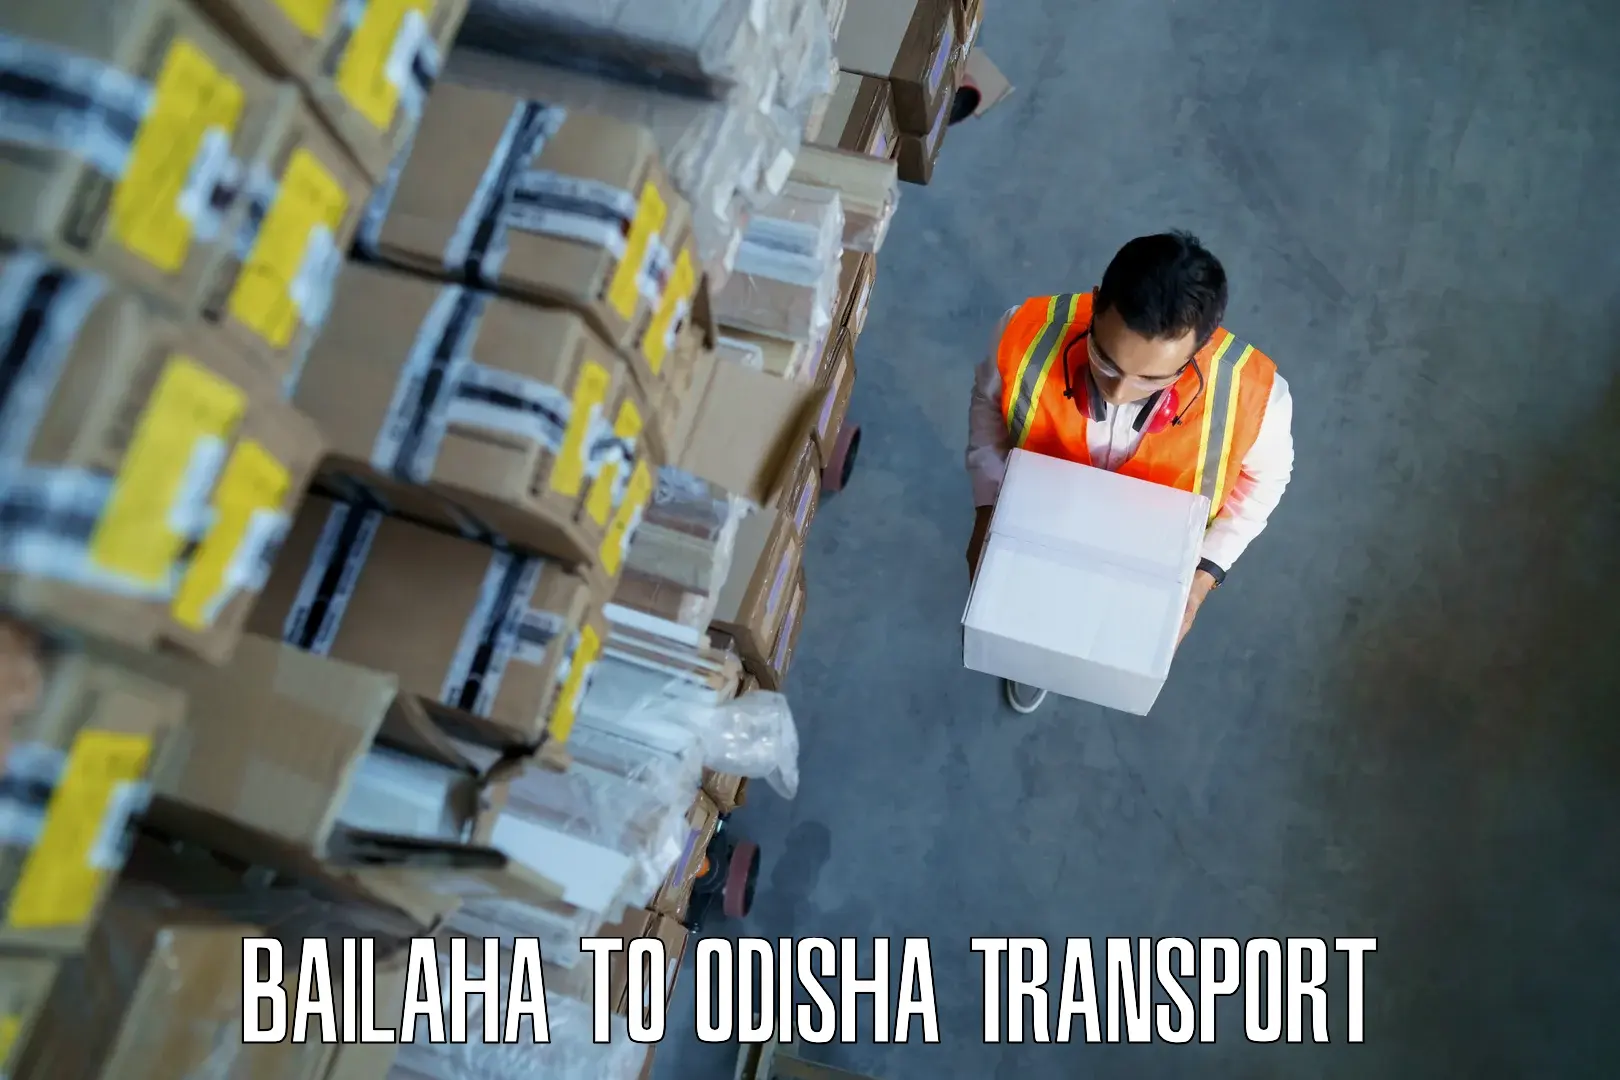 Furniture transport service Bailaha to Kosagumuda